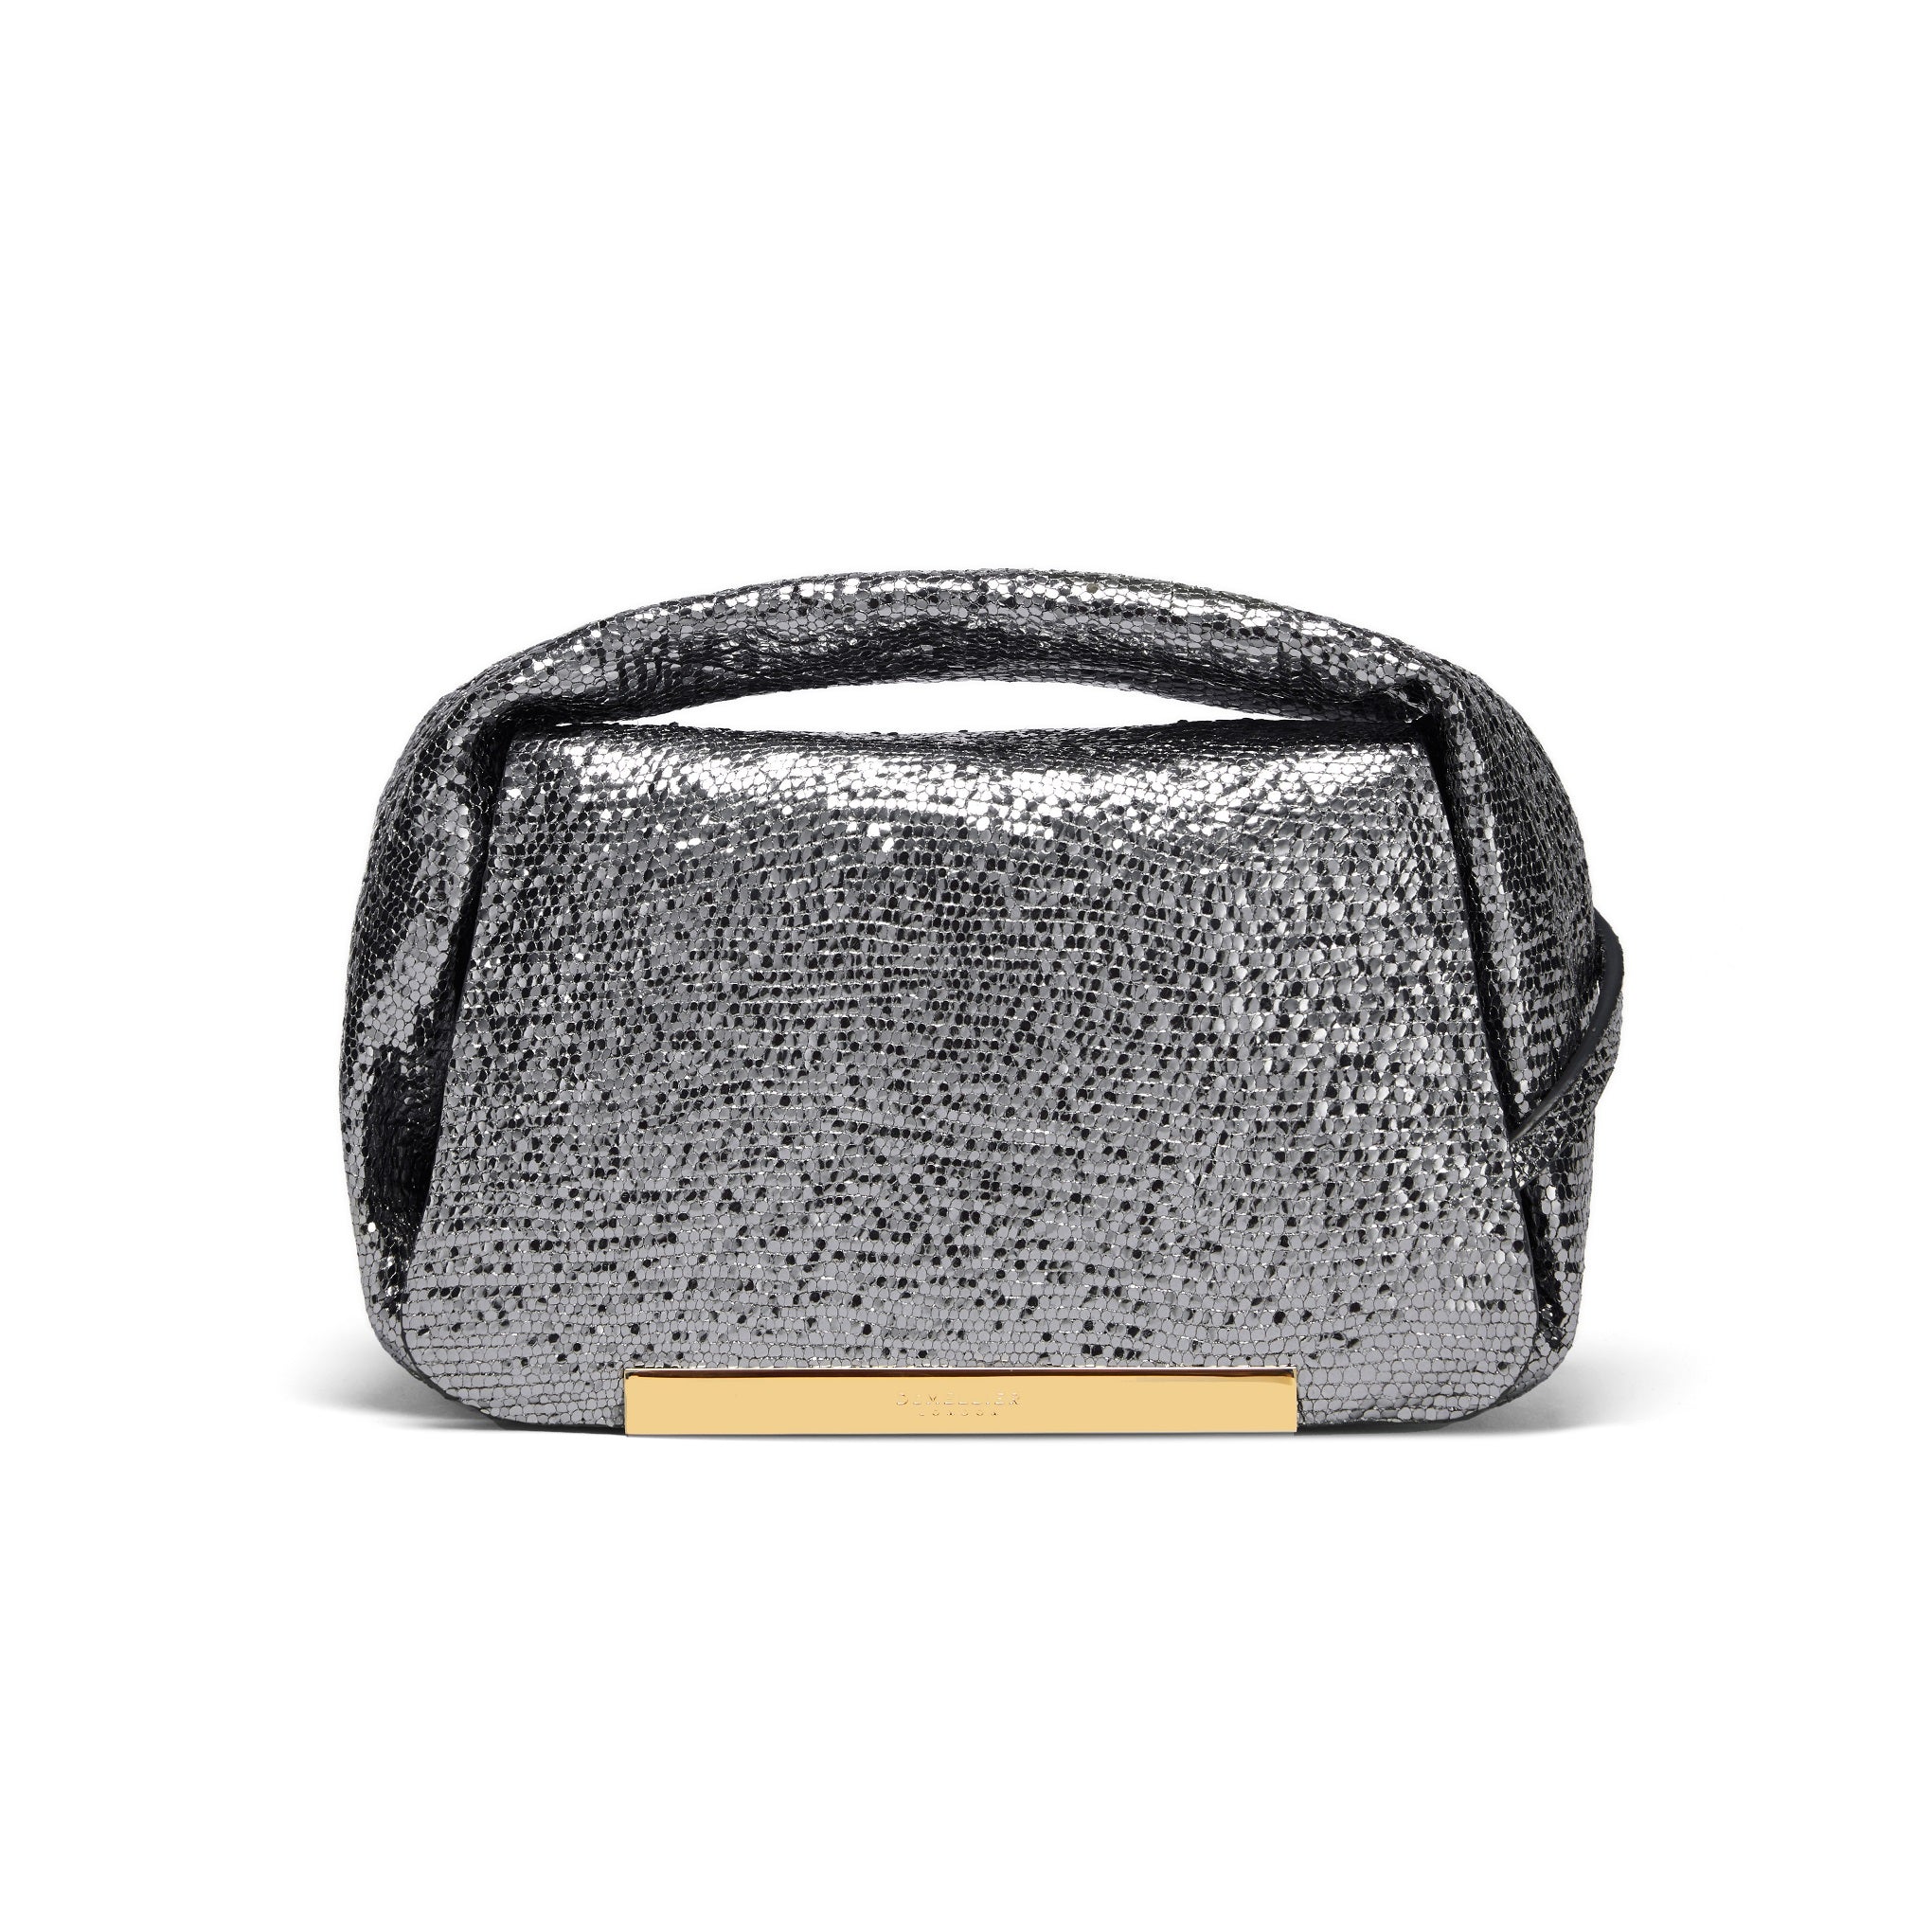 Demellier | The Mini London in Silver Metallic | Leather Shoulder Bag